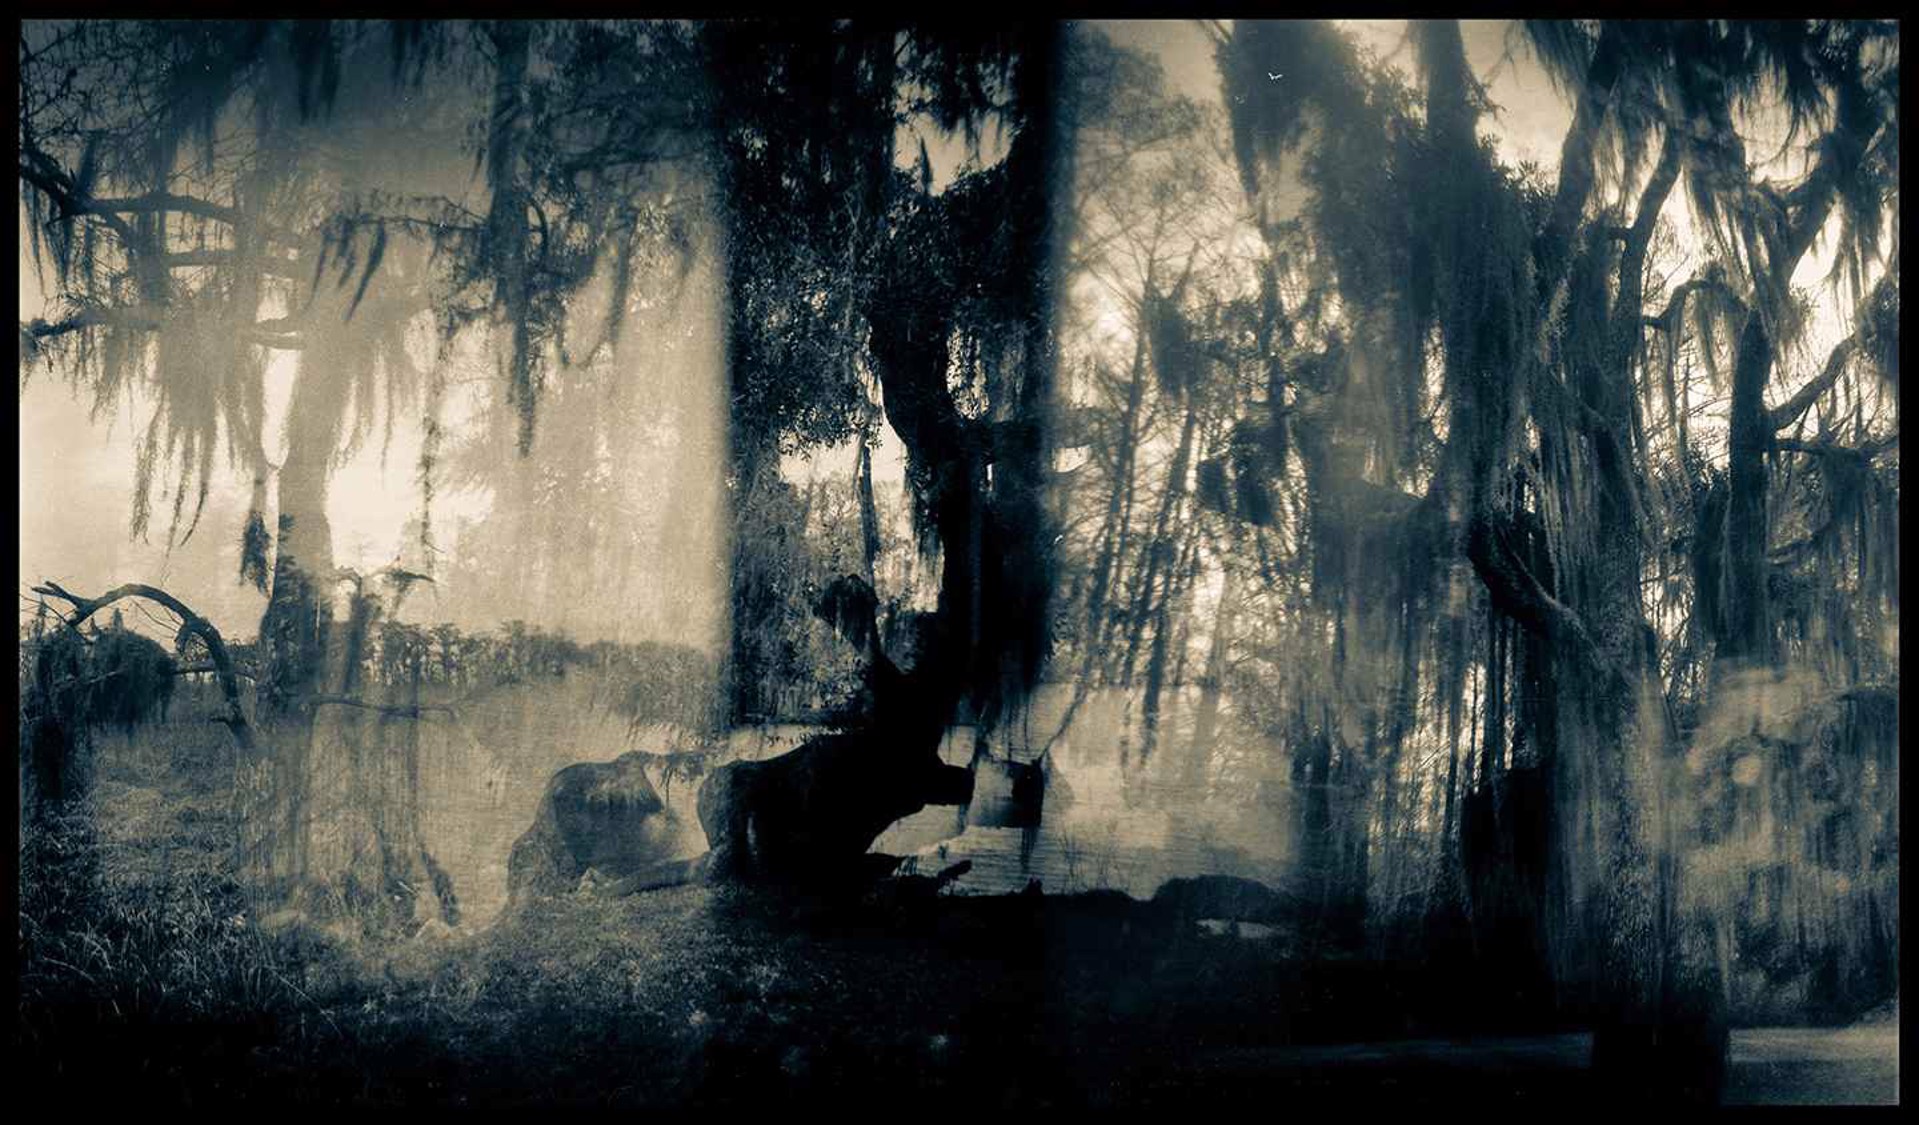 Swamp Fantasy by George Yerger